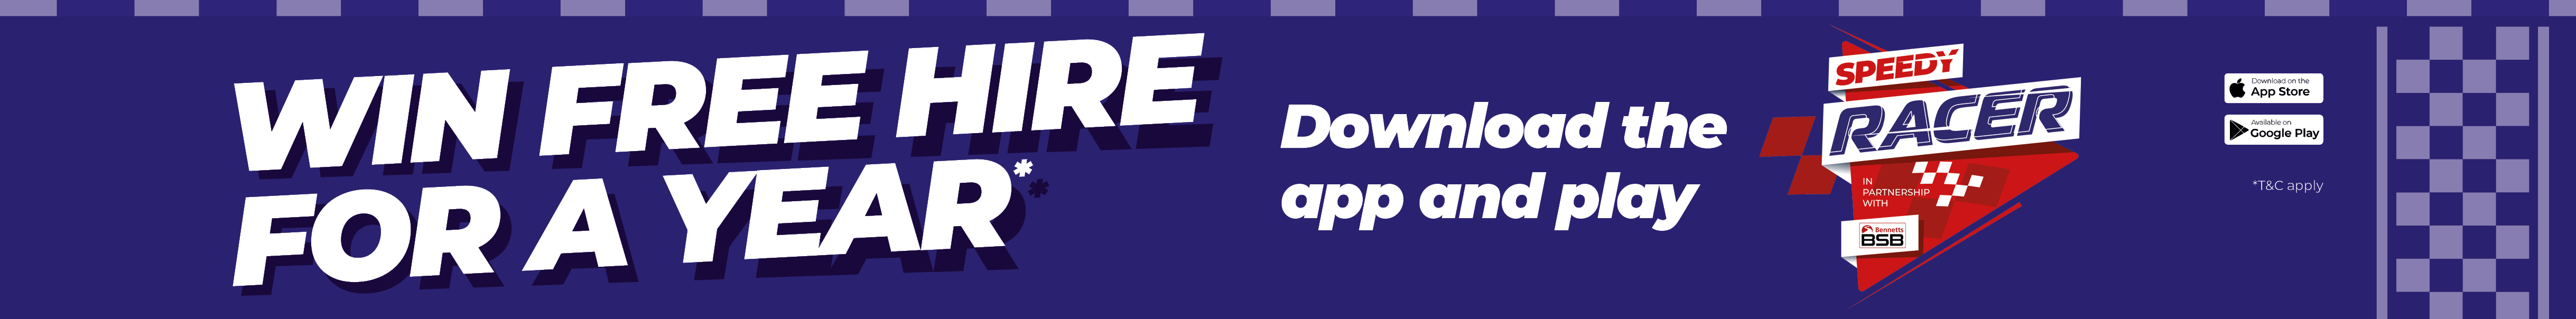 App Game Launch LP banner.jpg